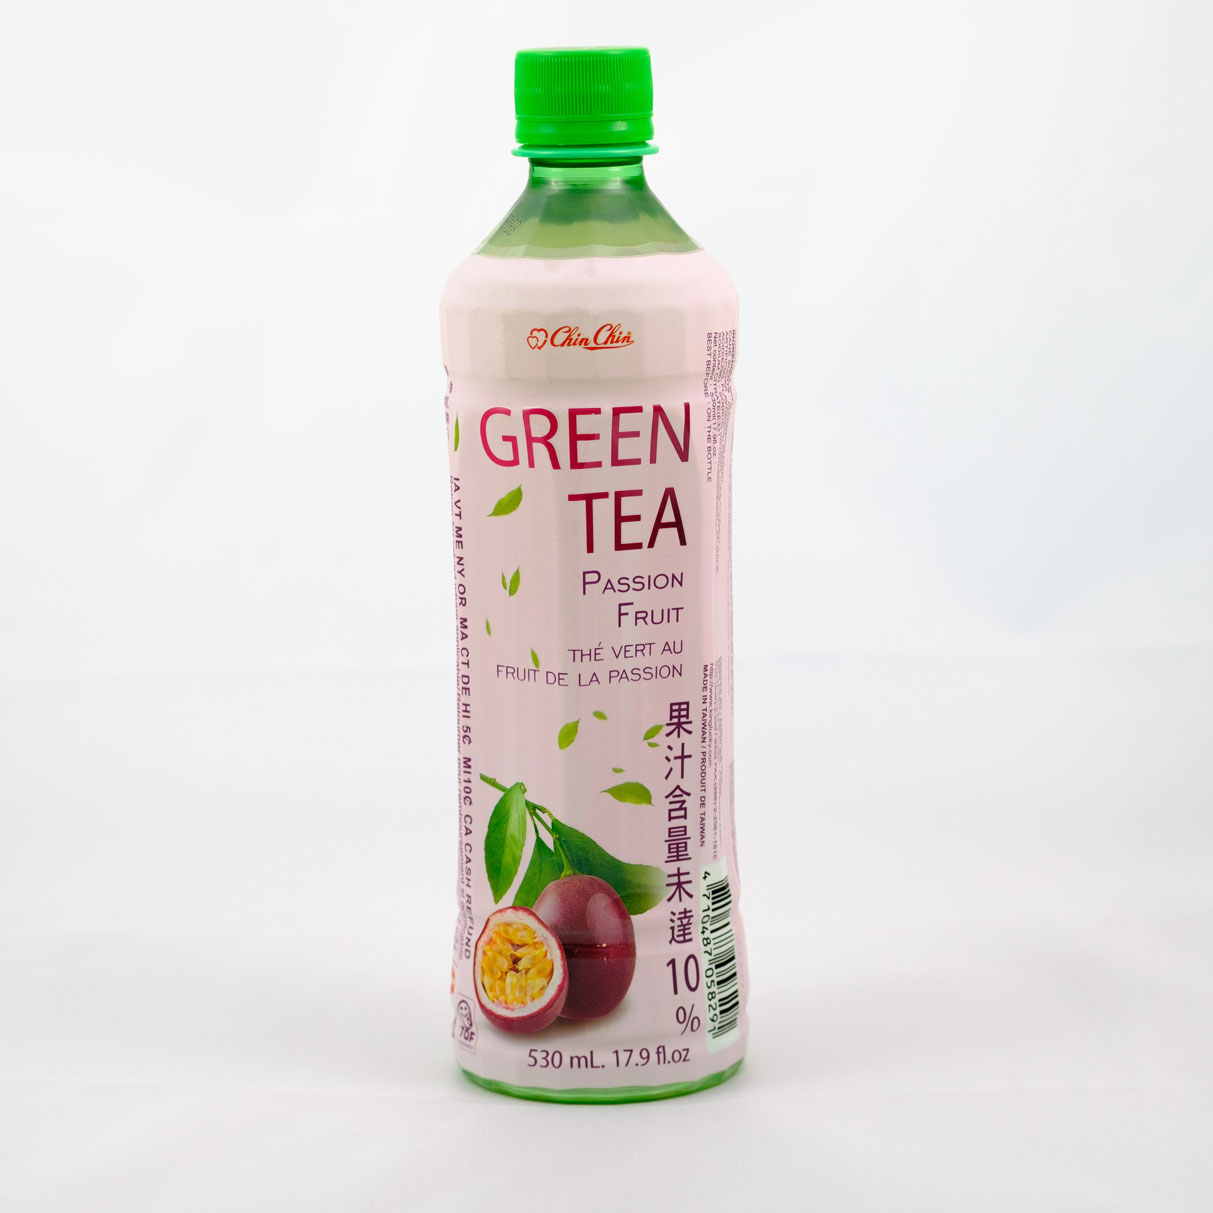 Chin Chin Green Tea – Passion Fruit 530ml